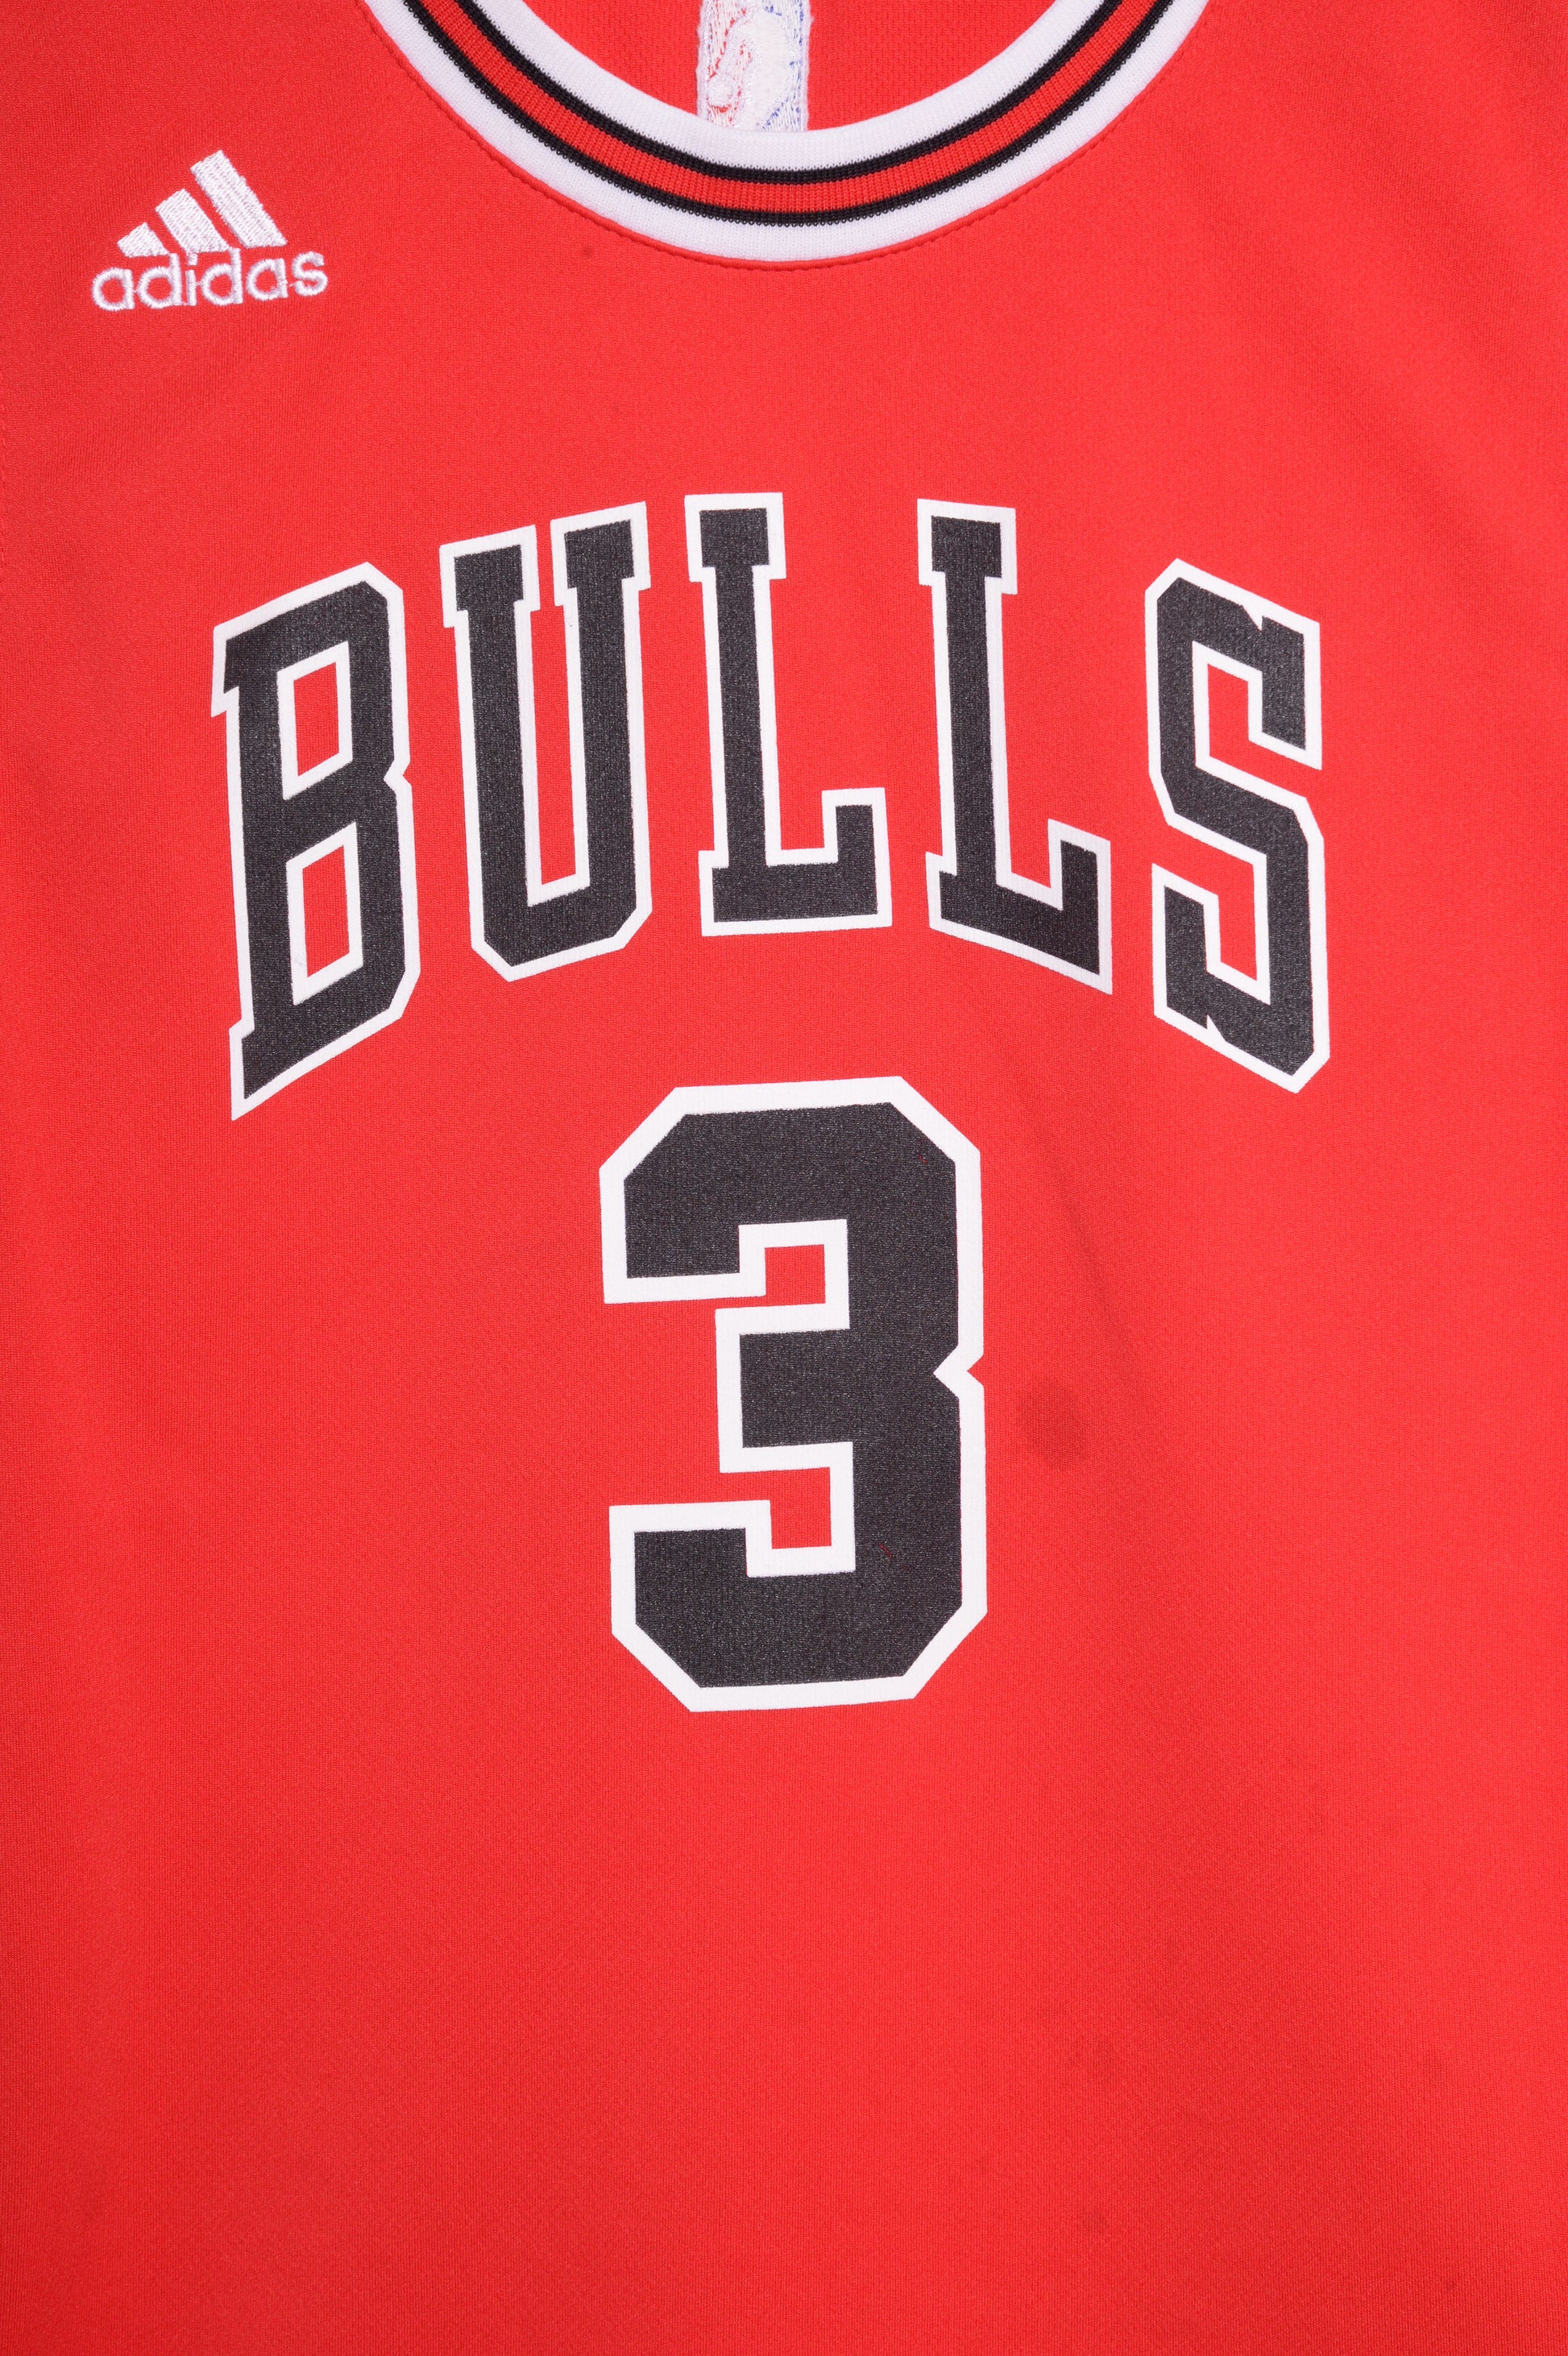 Bulls Alternate Jerseys  Jersey, Pinstripe, Uniform design